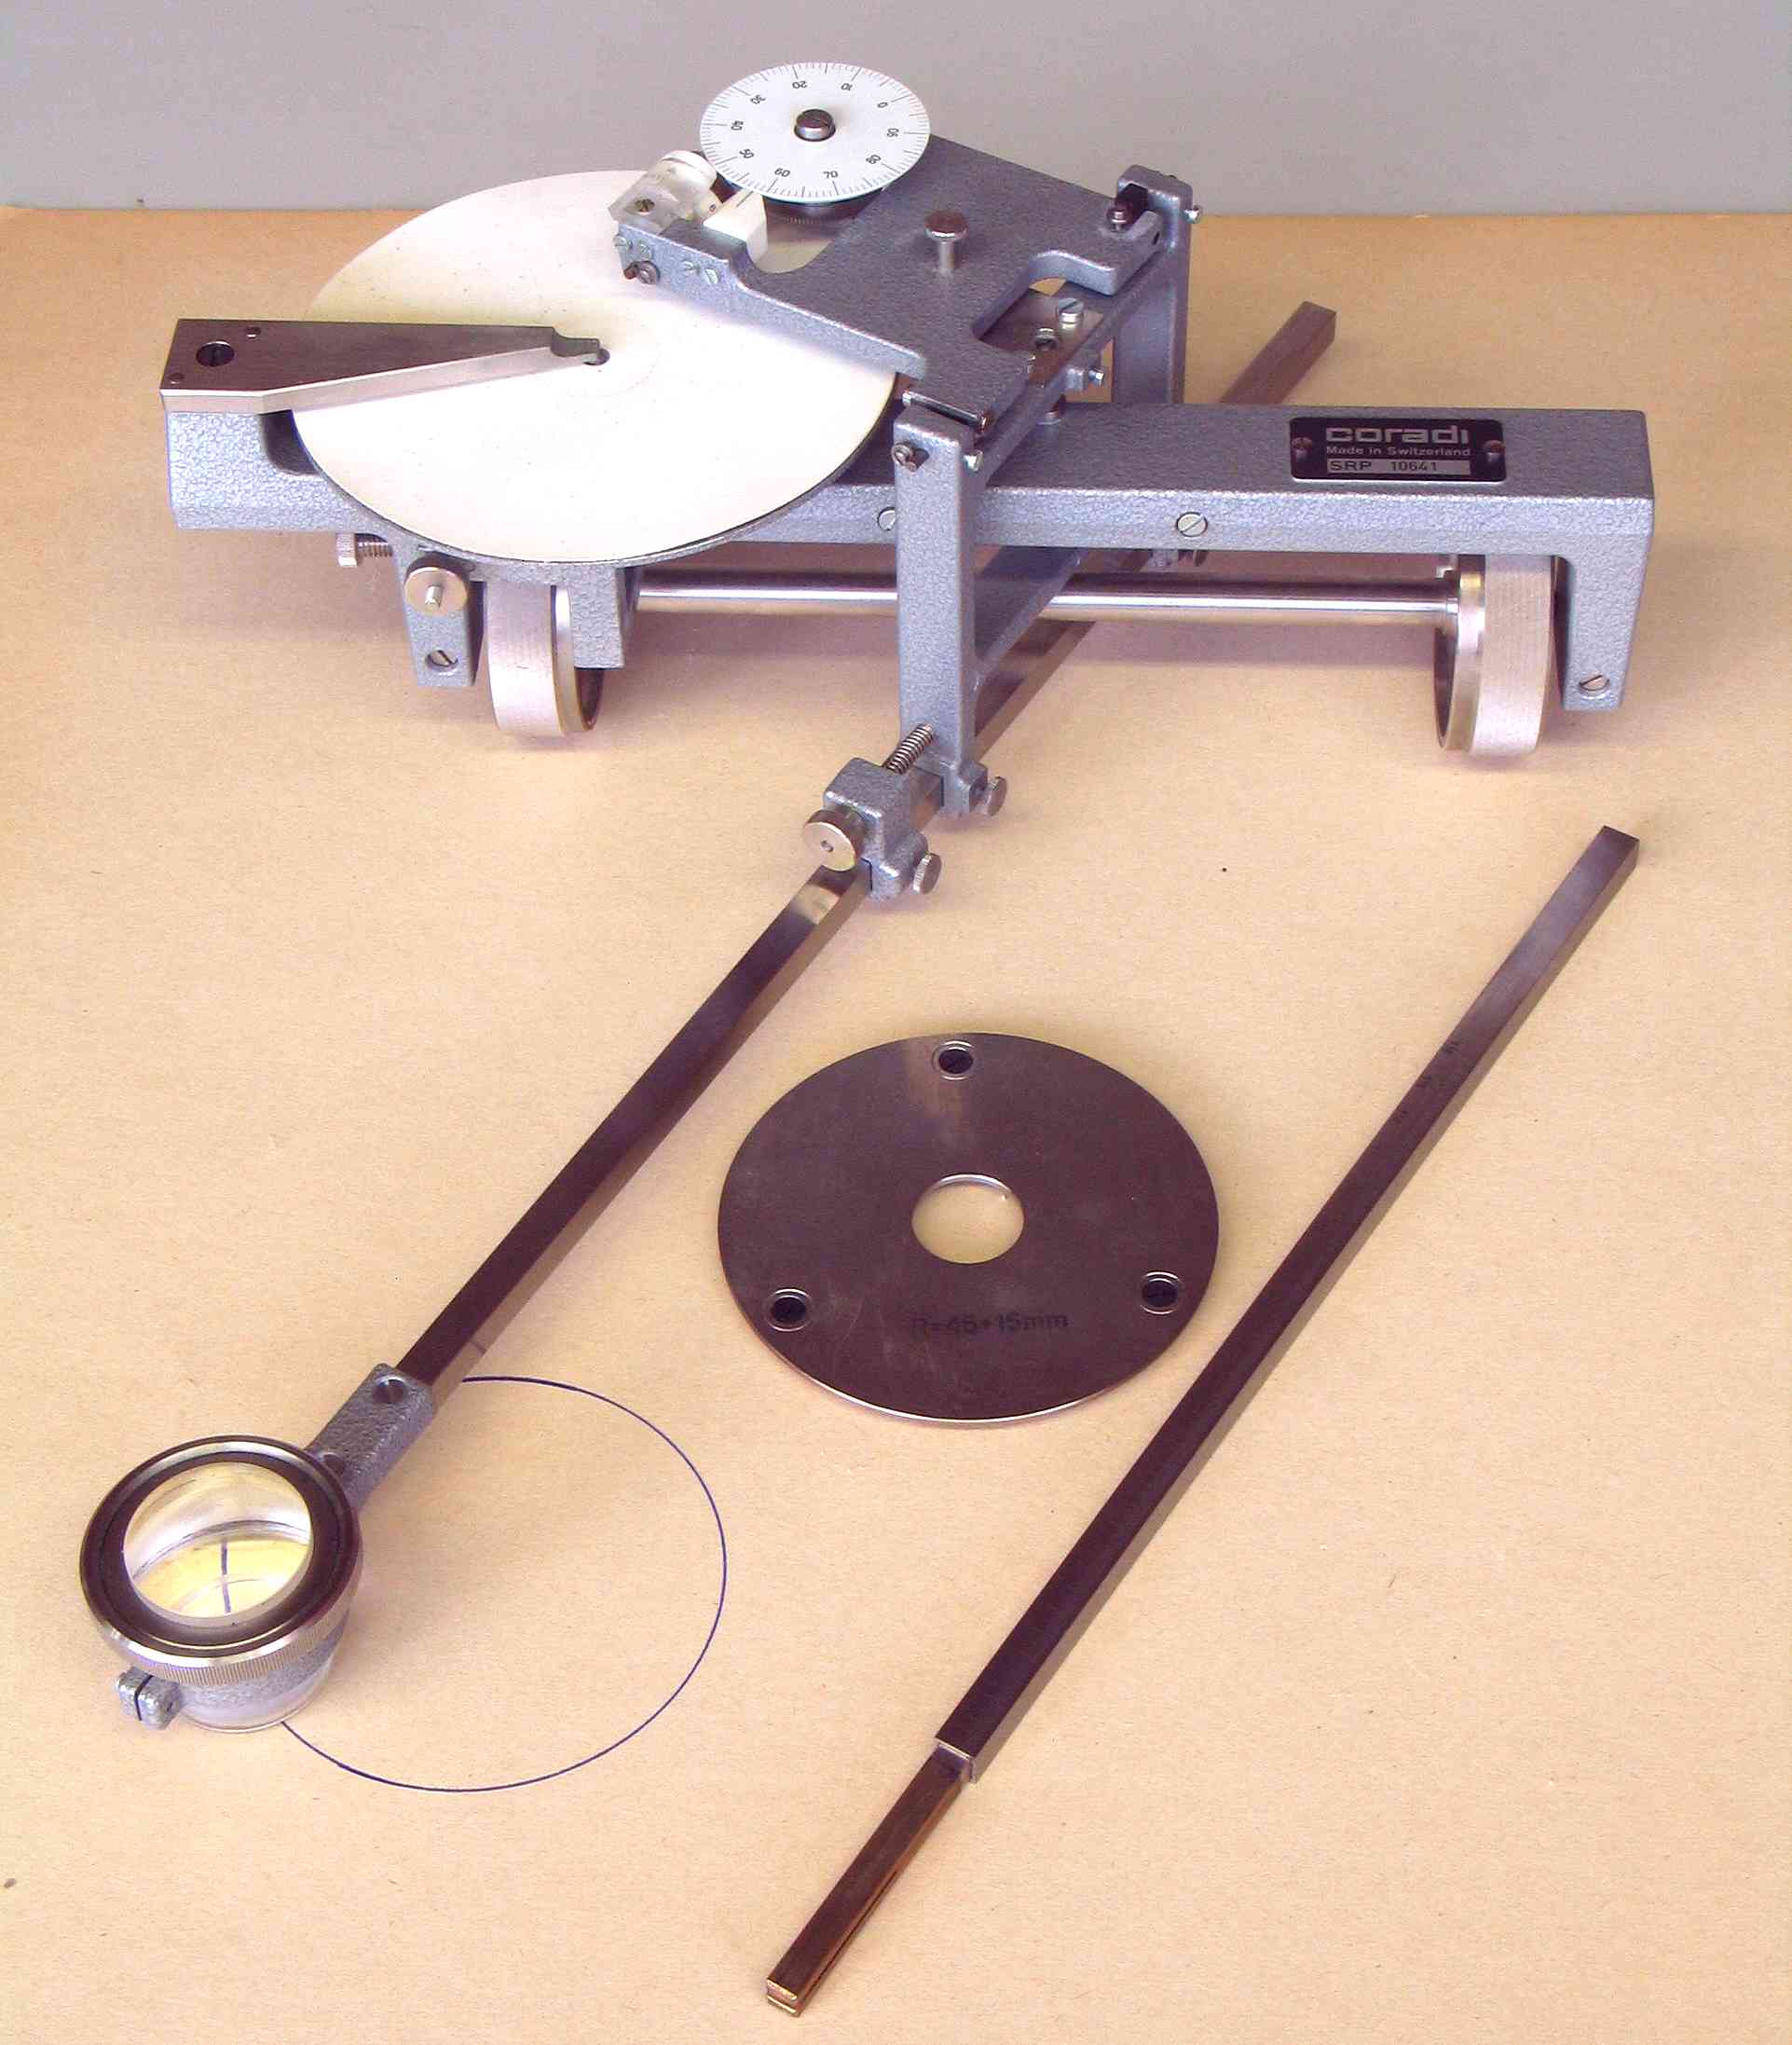 Planimètre roulant à disque
(Coradi SRP I/II)